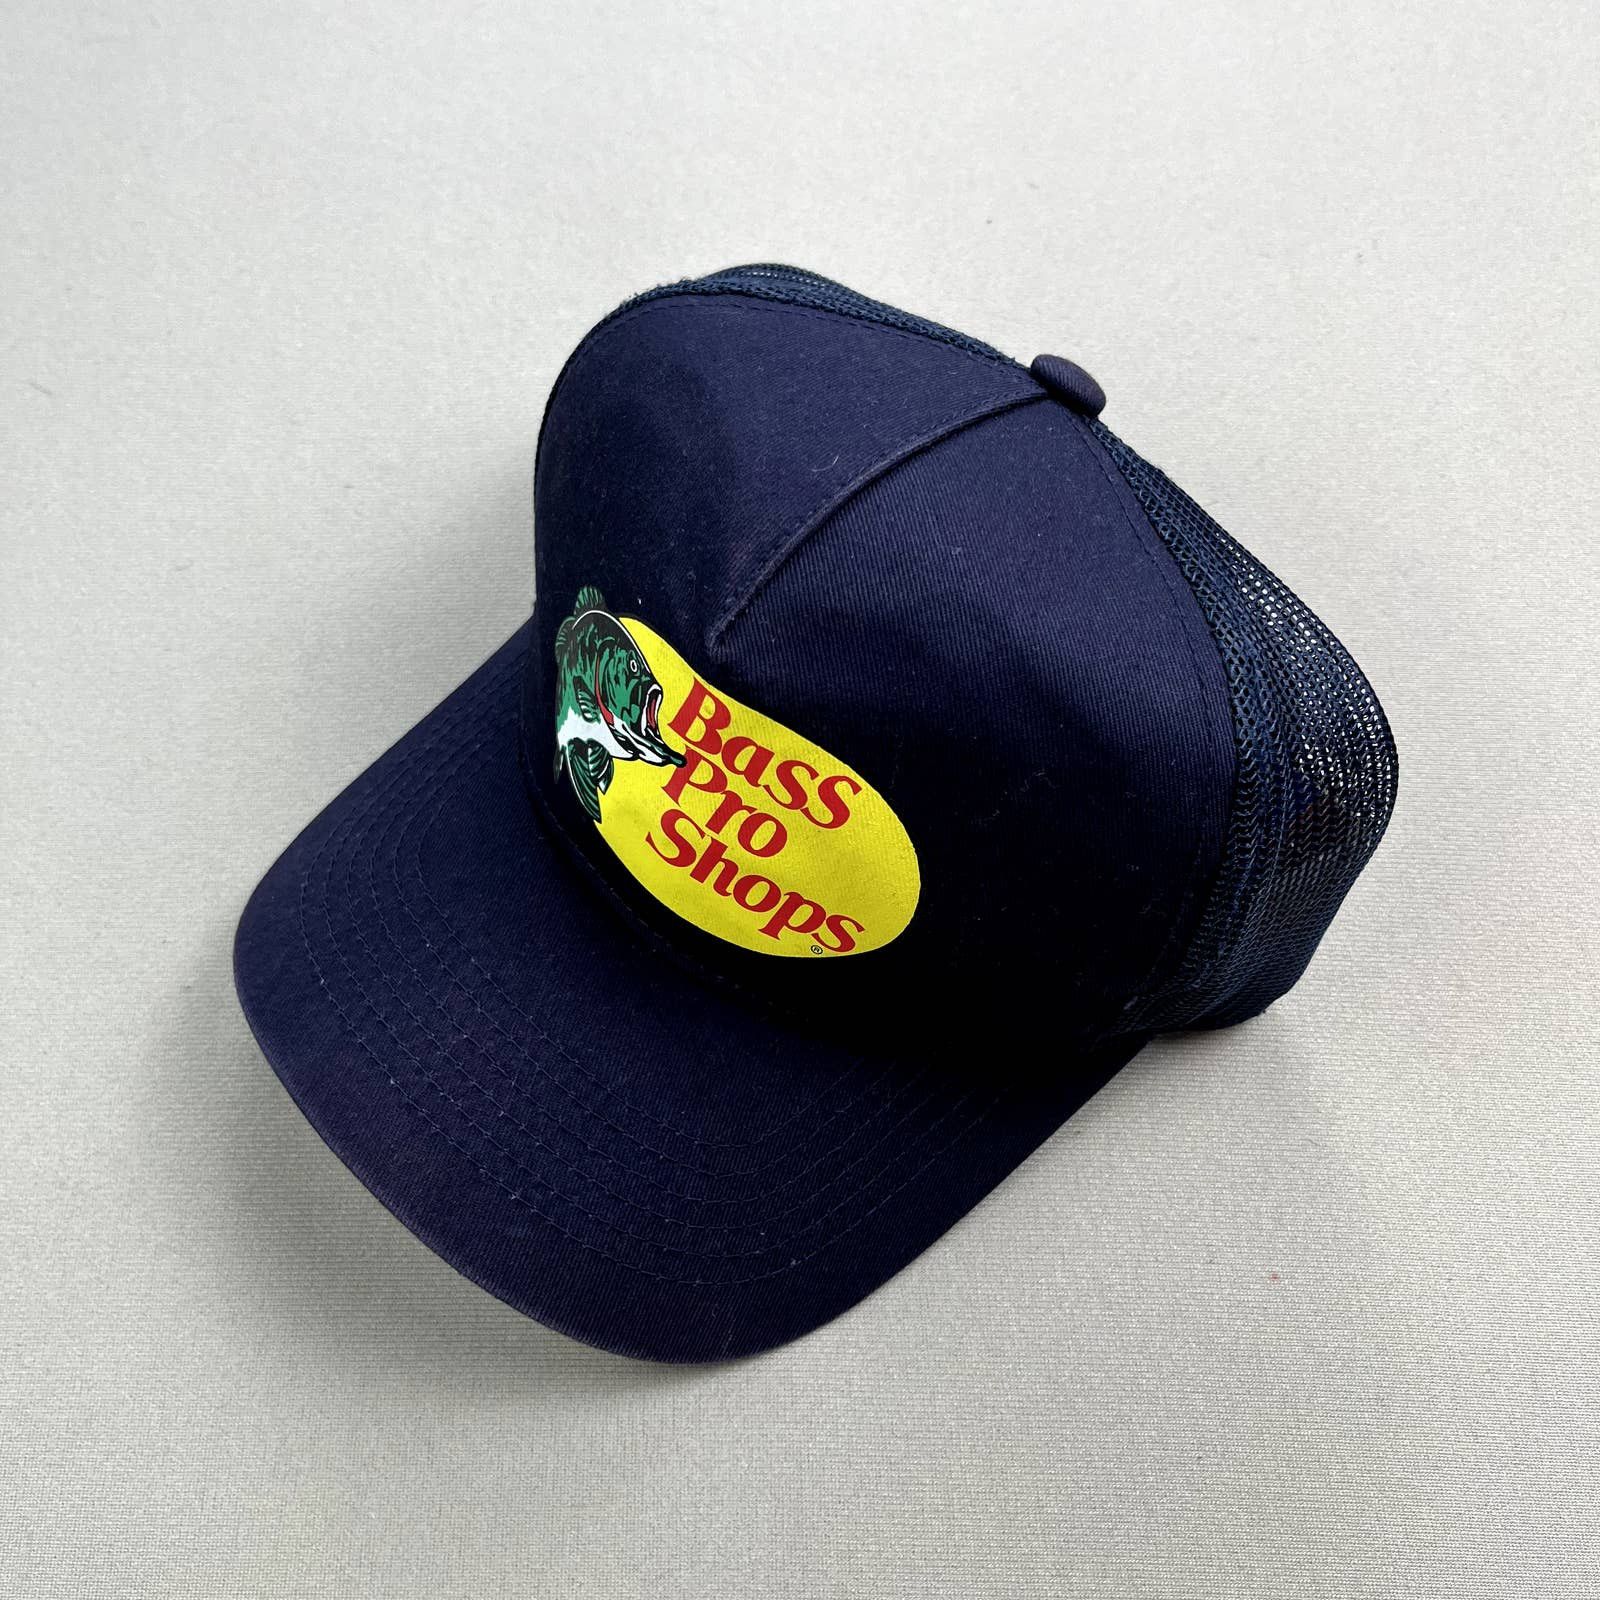 Bass Pro Shops Fishing Trucker Hat Mesh Cap Adjustable SnapBack [ green ]  One Sz